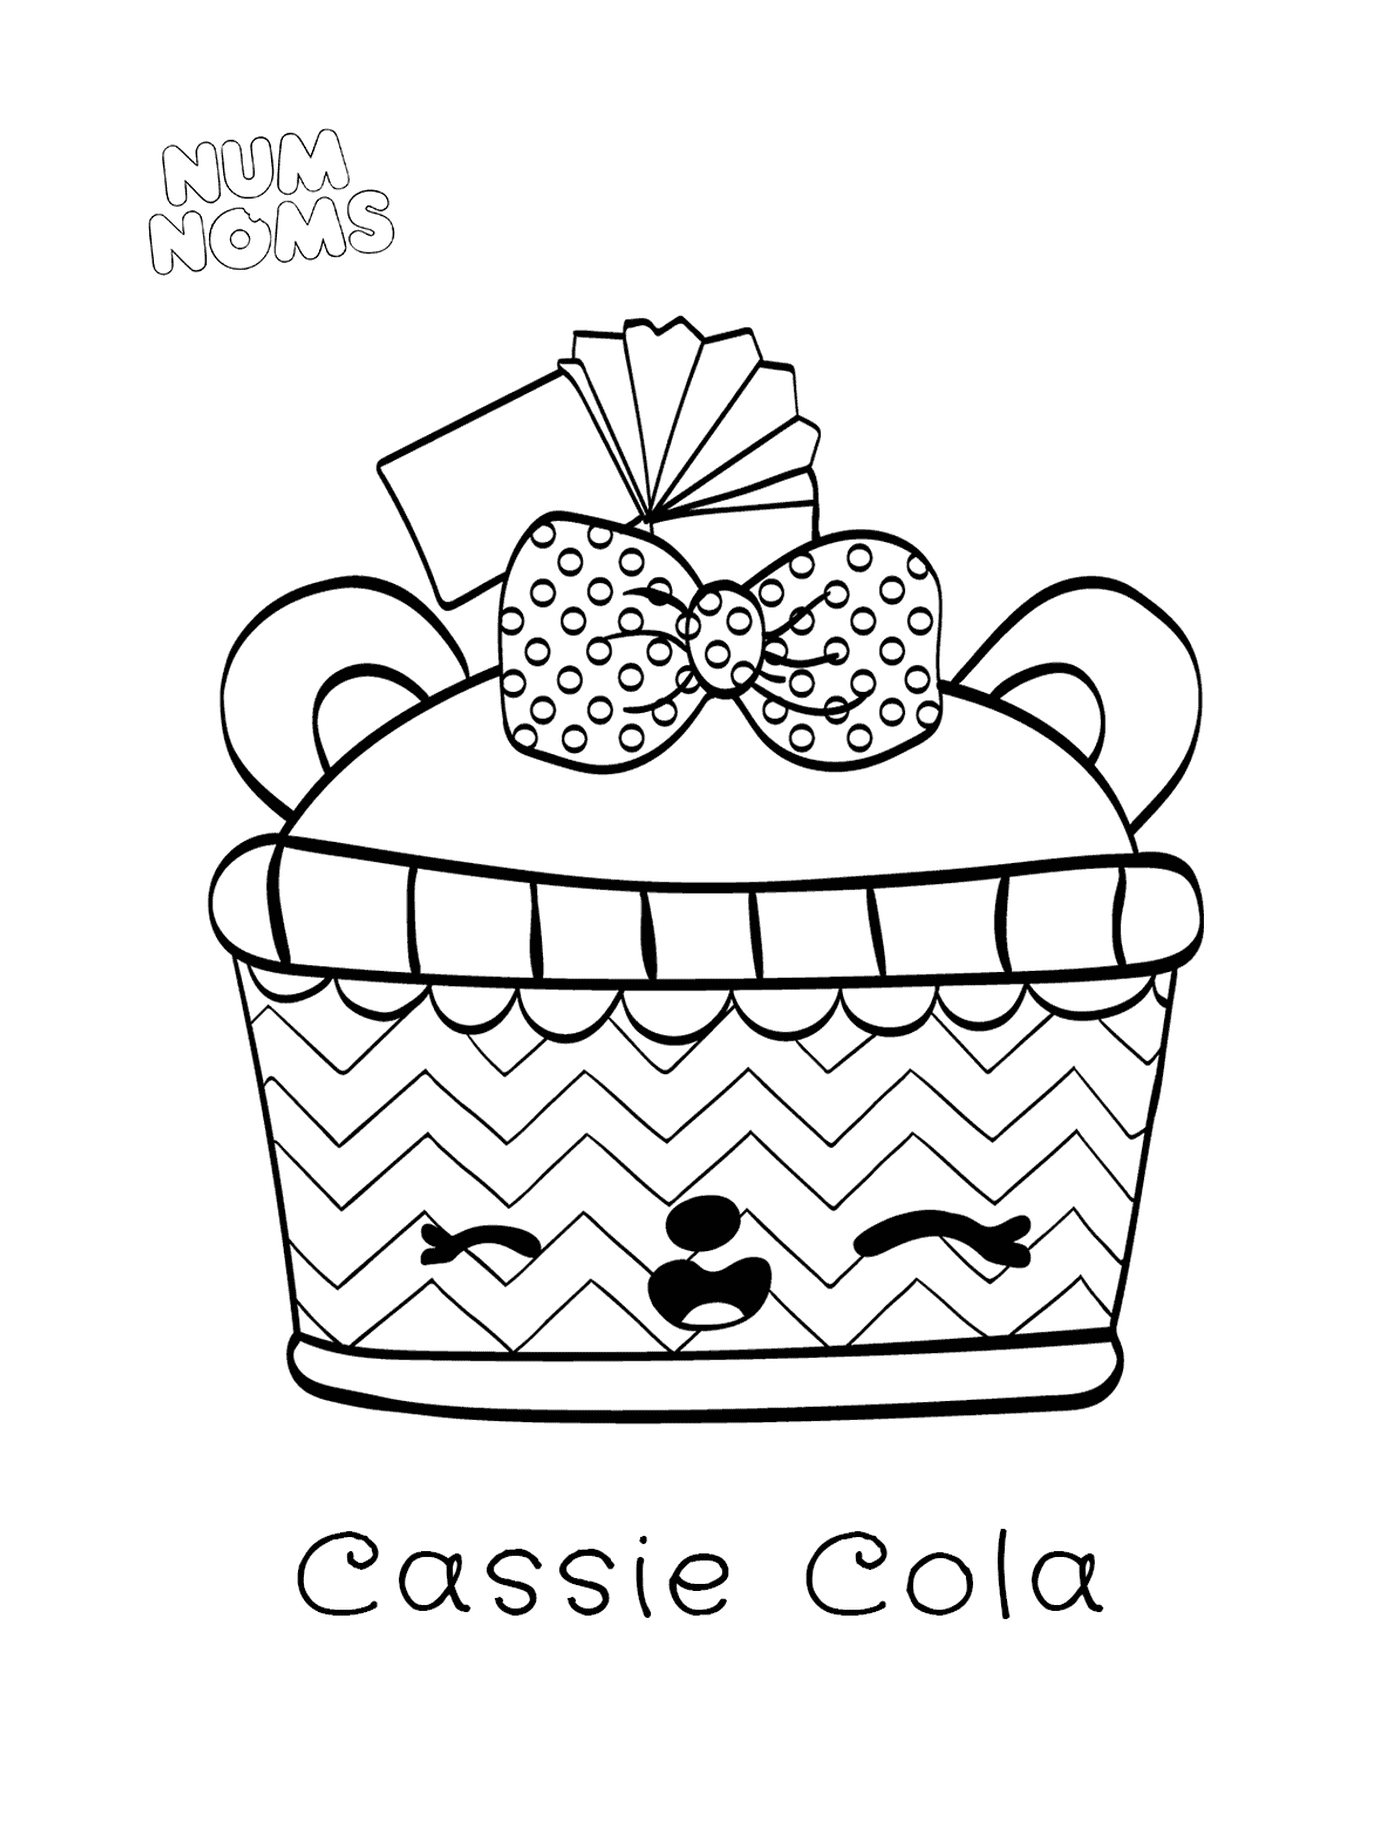  Coloring Page Num Names Cassie Cola 